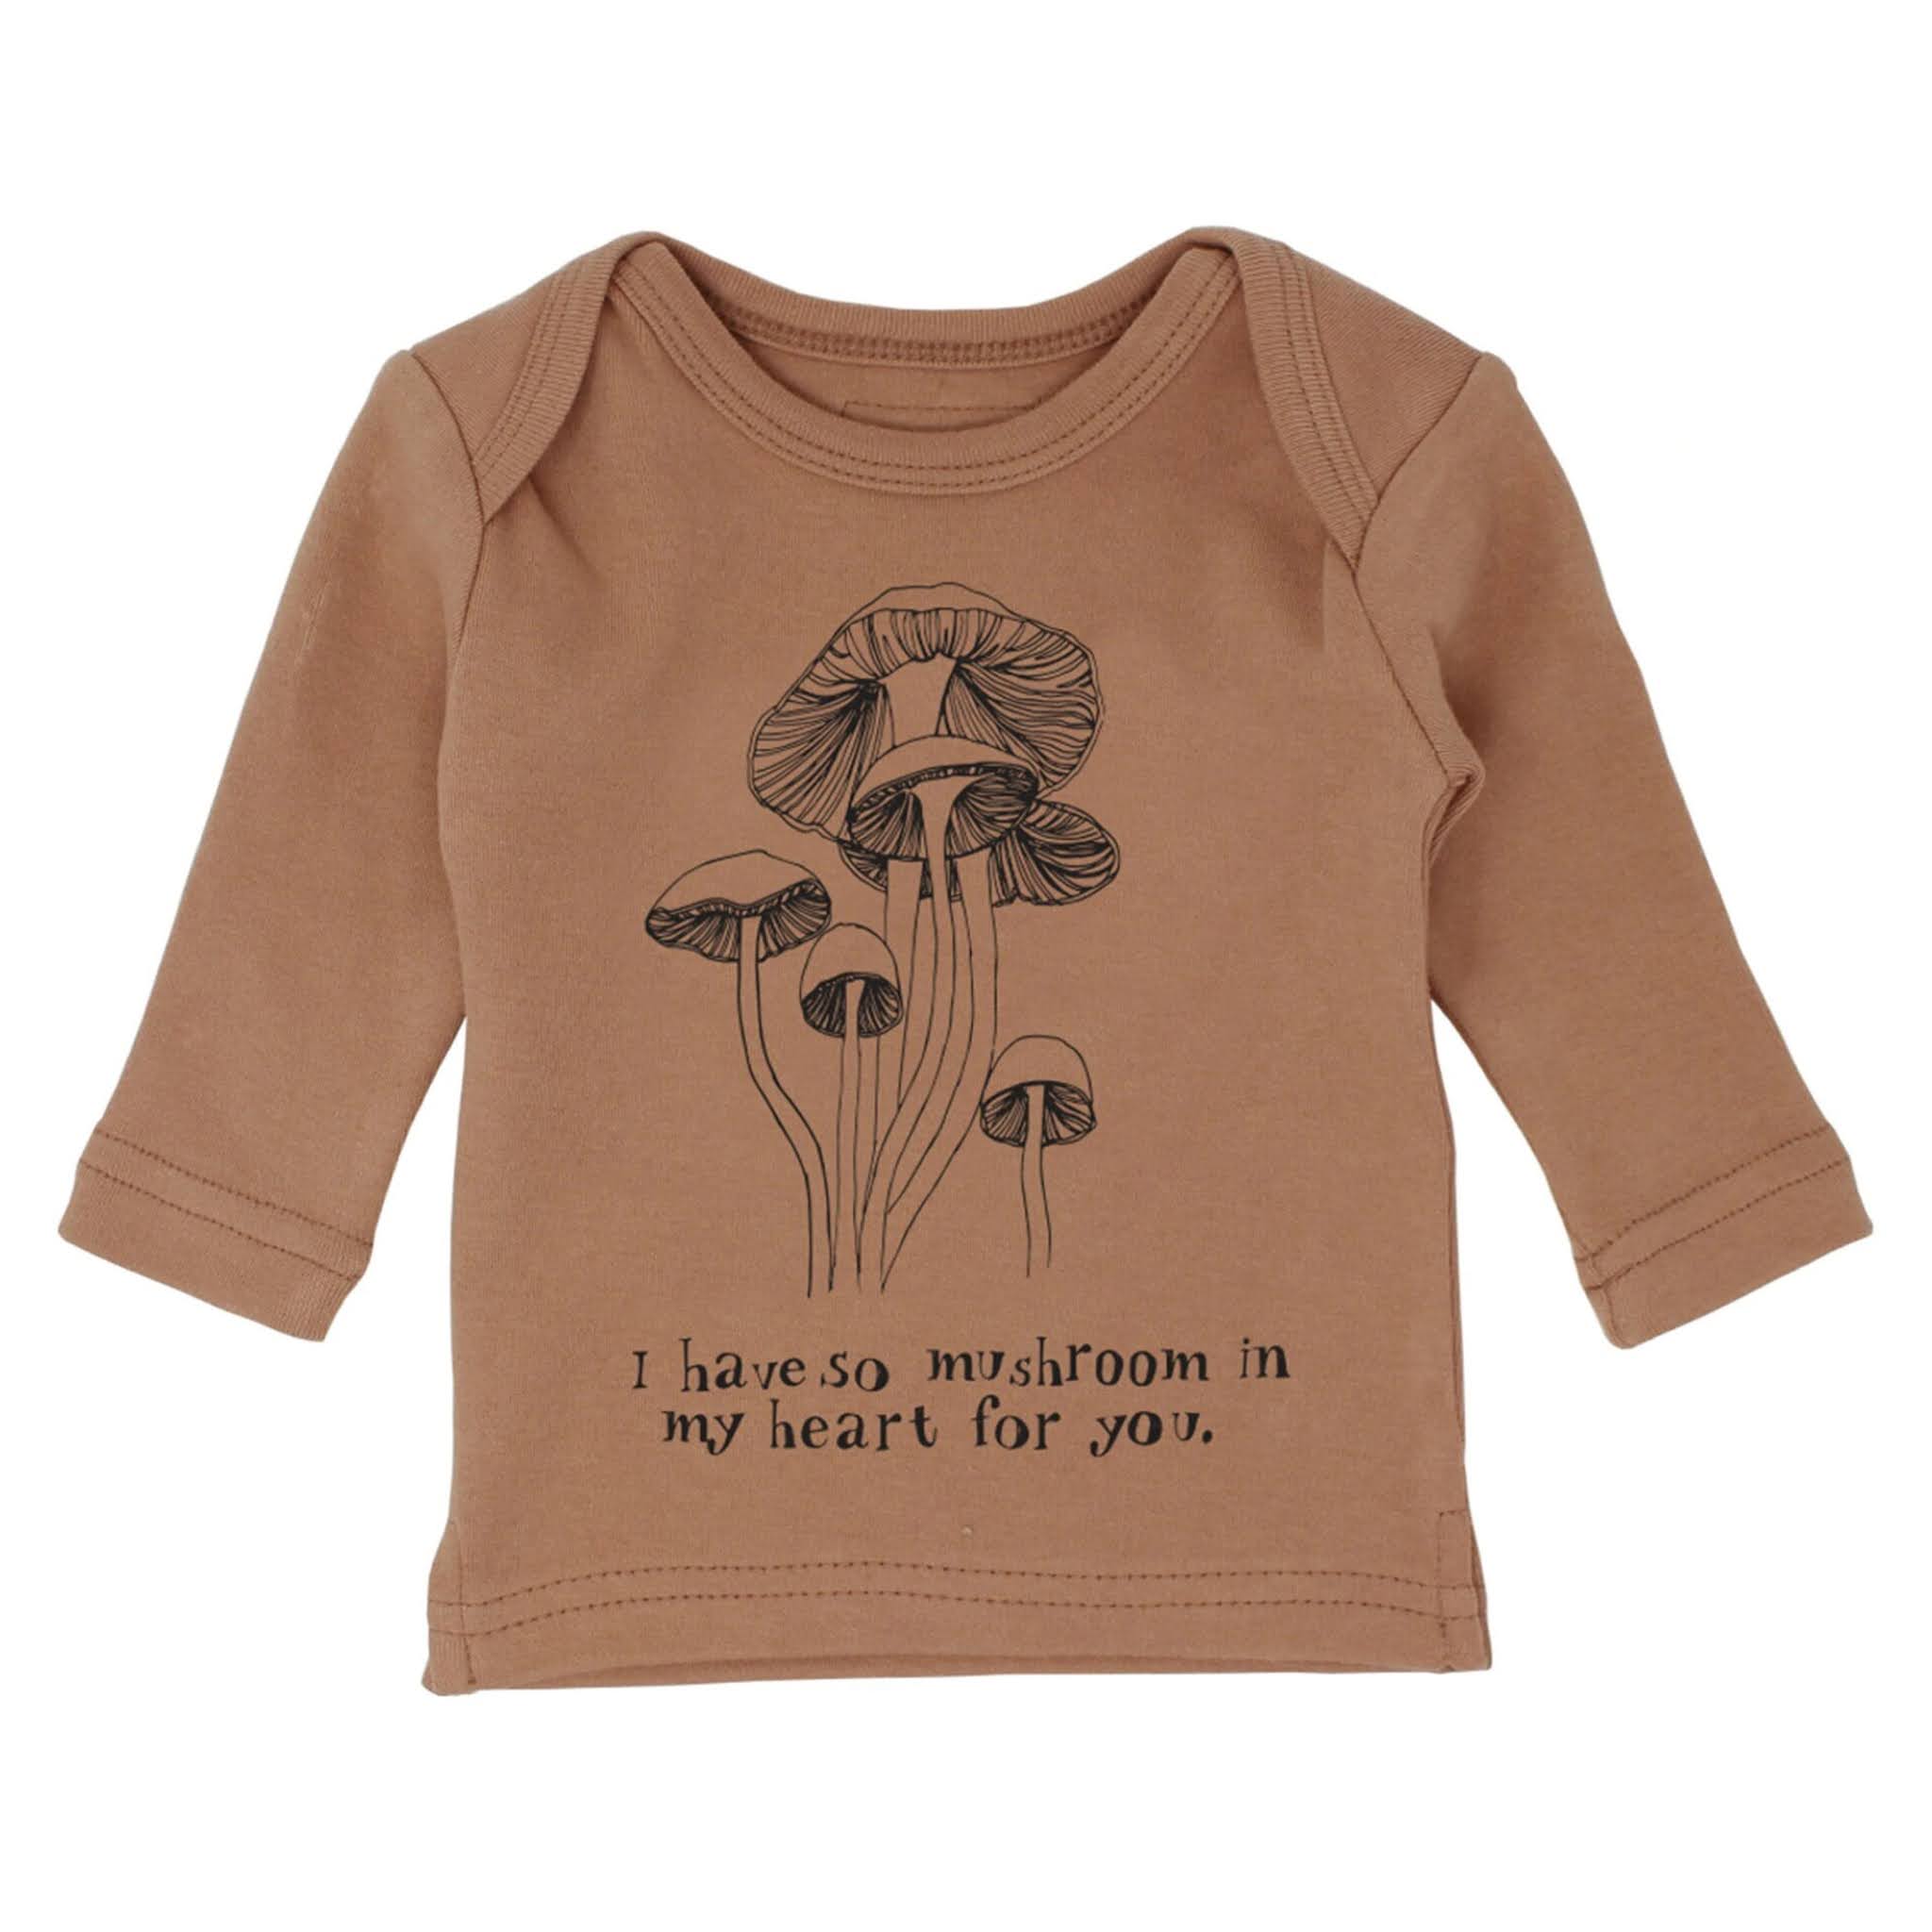 Baby Mushroom Long Sleeve Shirt from L'ovedbaby